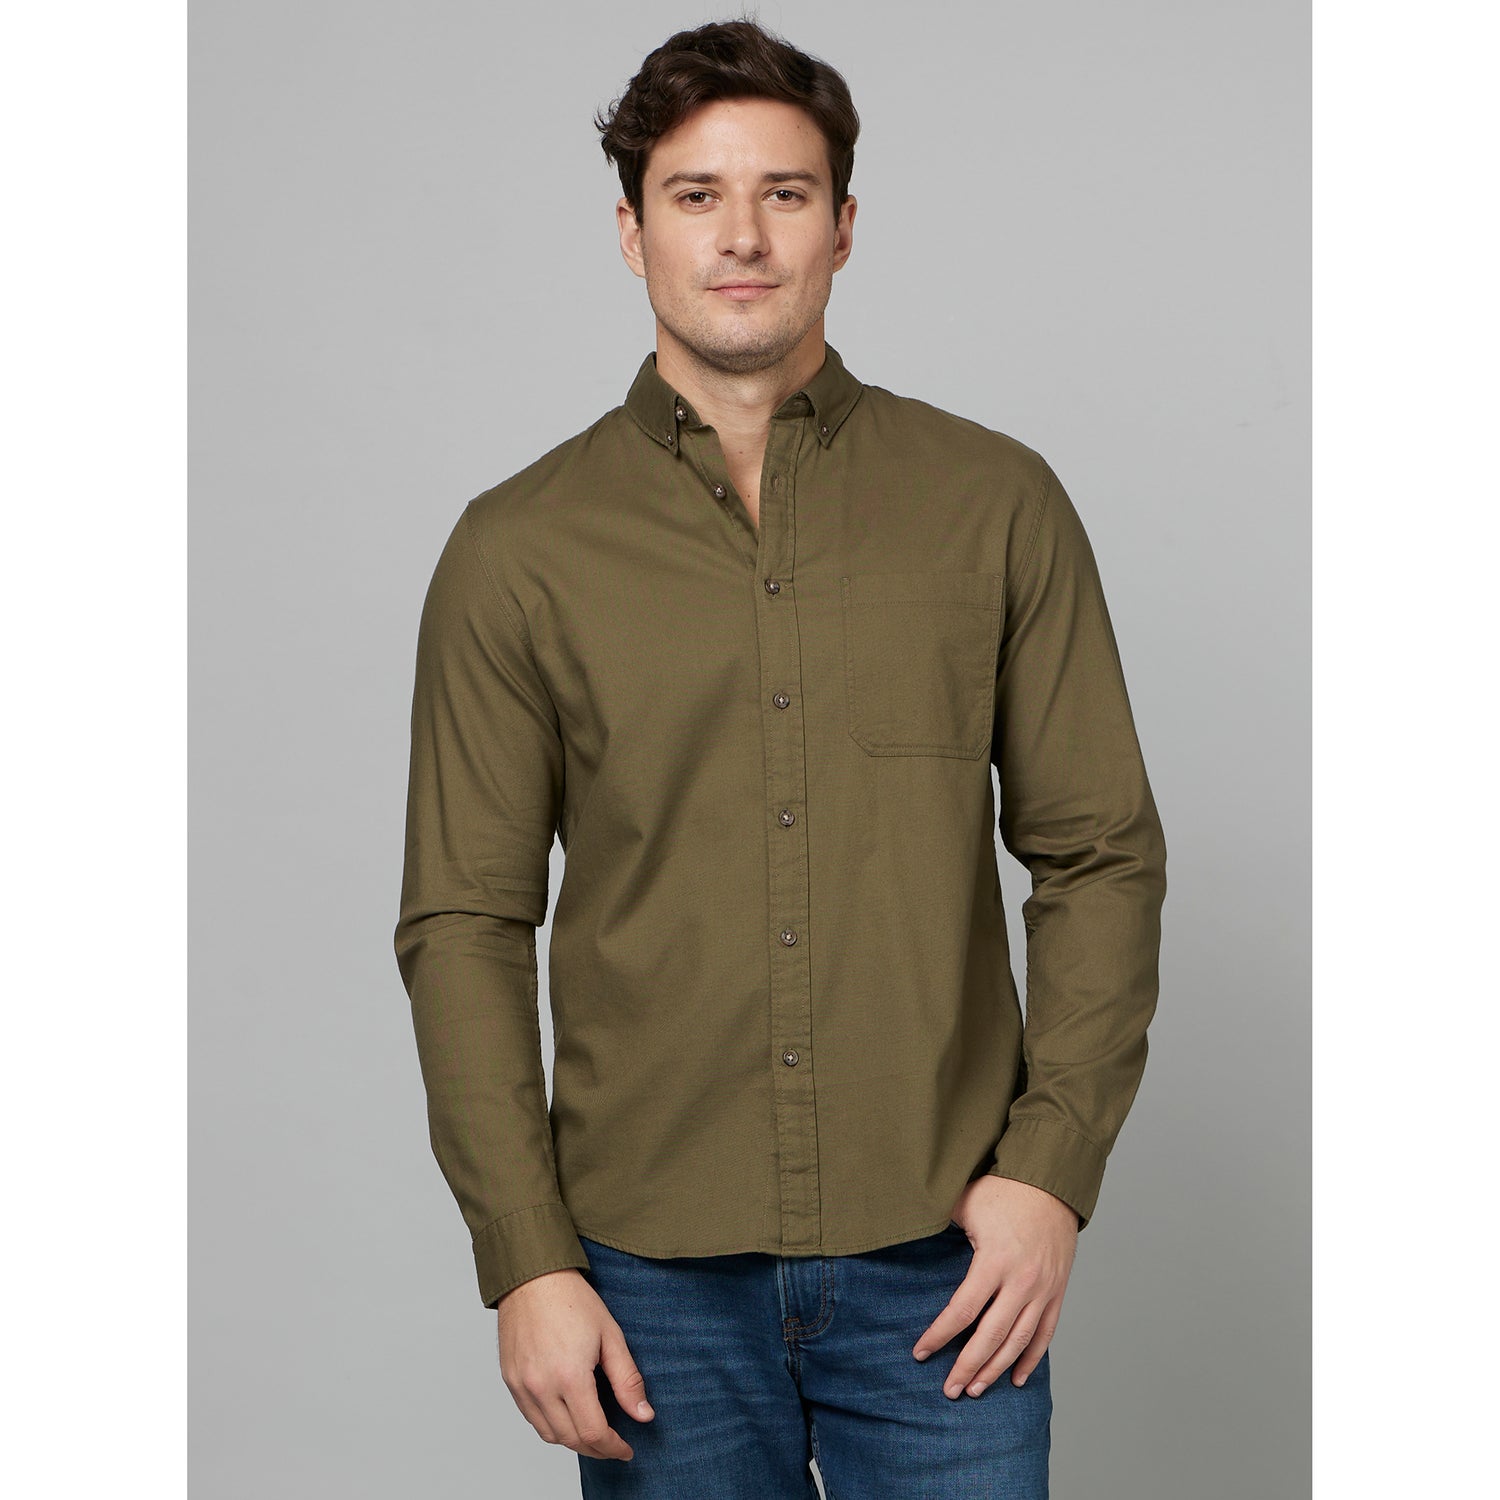 Olive Green Classic Button Down Collar Cotton Casual Shirt (FAROBONE2)